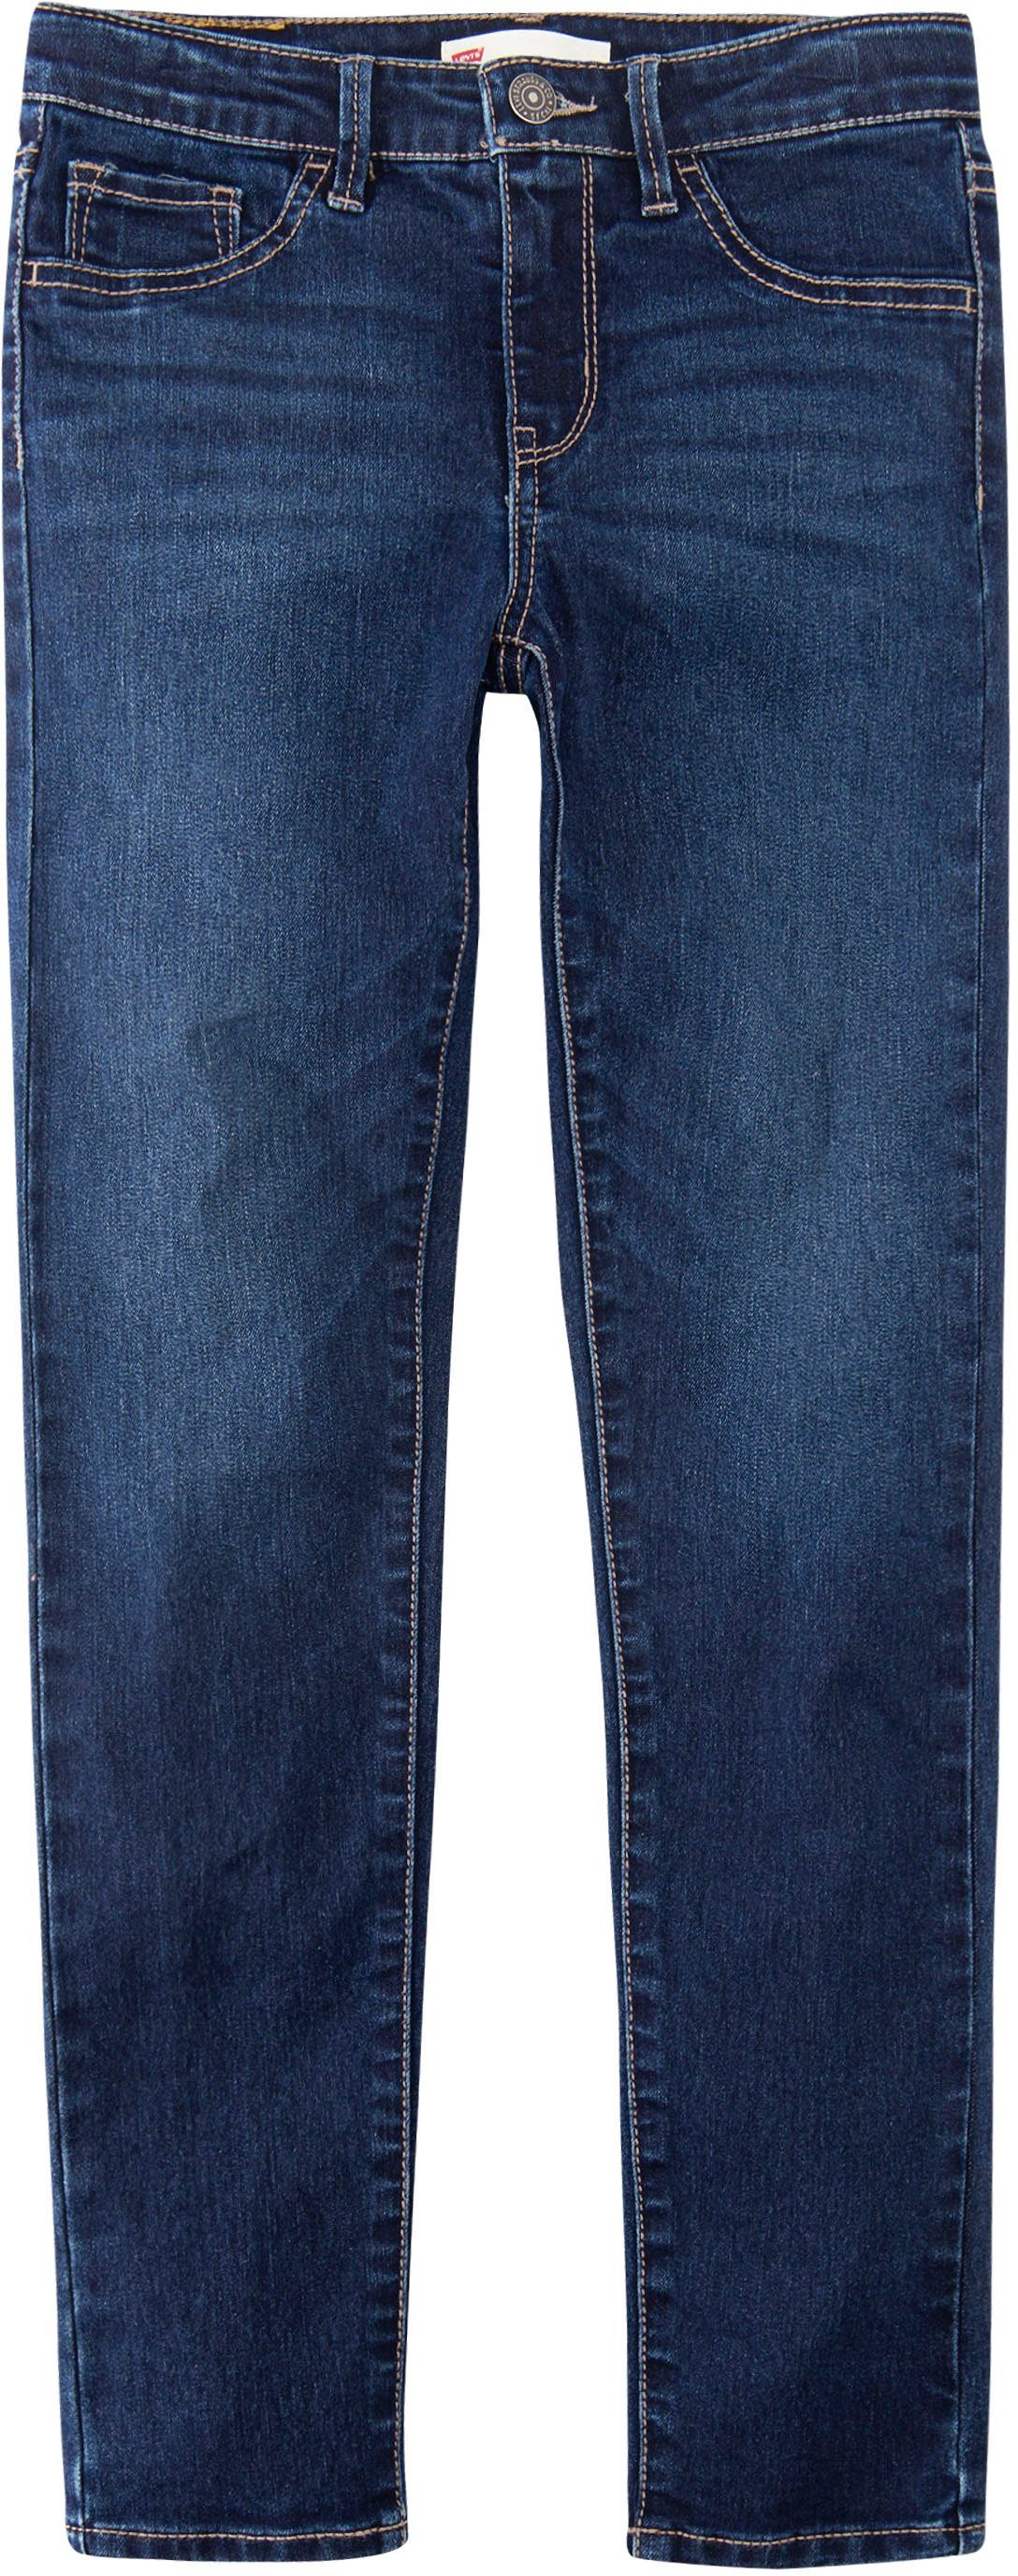 SUPER Levi's® FIT JEANS SKINNY Stretch-Jeans 710™ for blue GIRLS Kids dark denim used